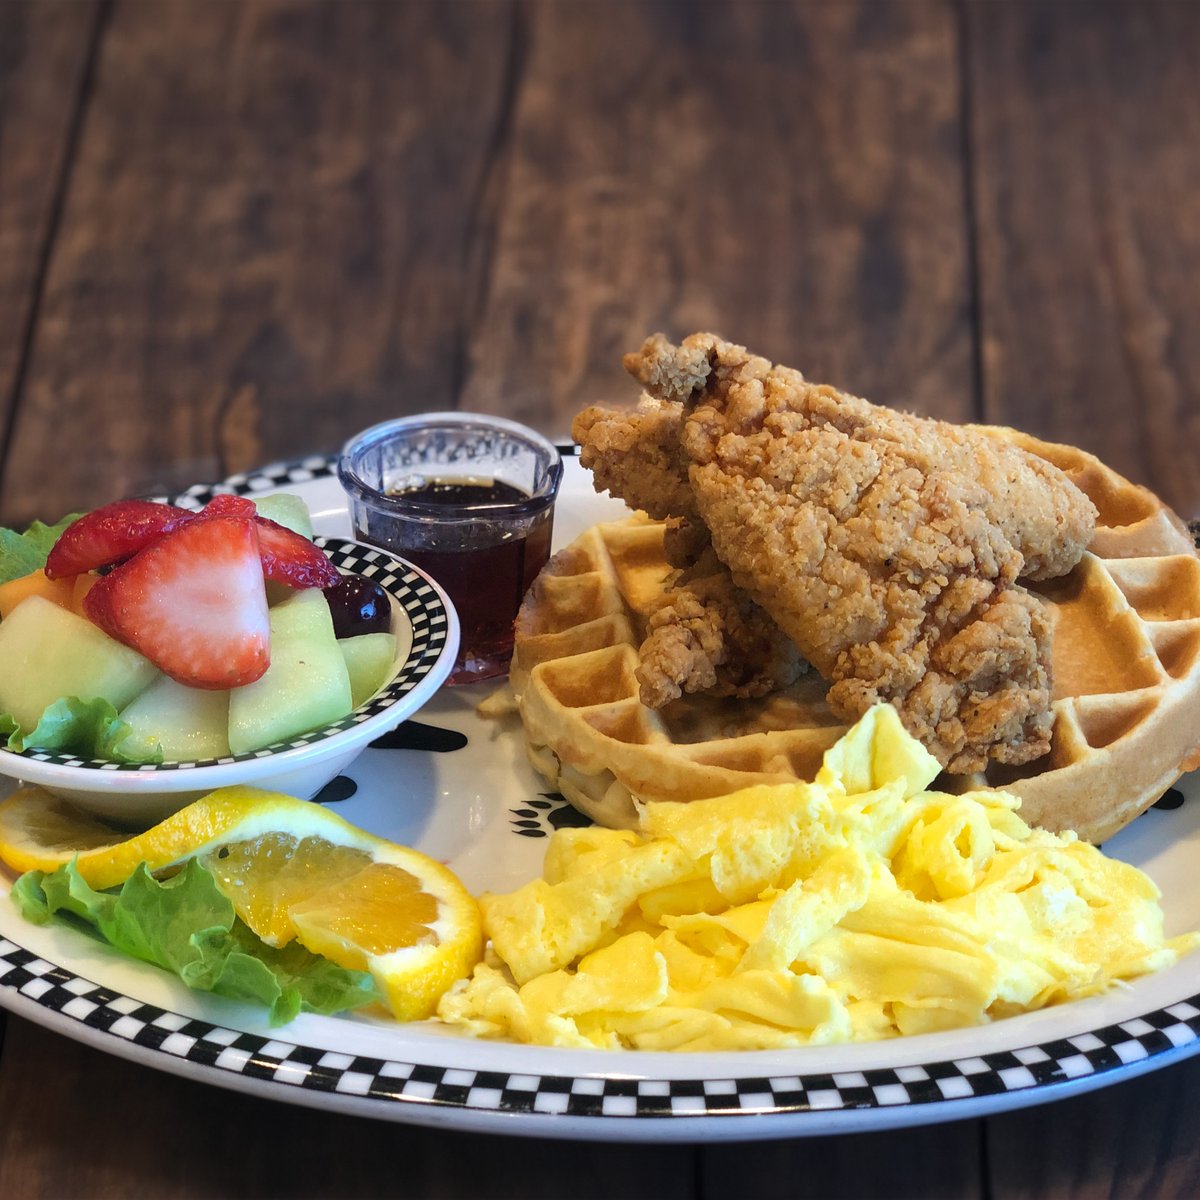 Fill in the blank: Waffles + _________ = Heavenly 😍🧇
#NationalWaffleDay